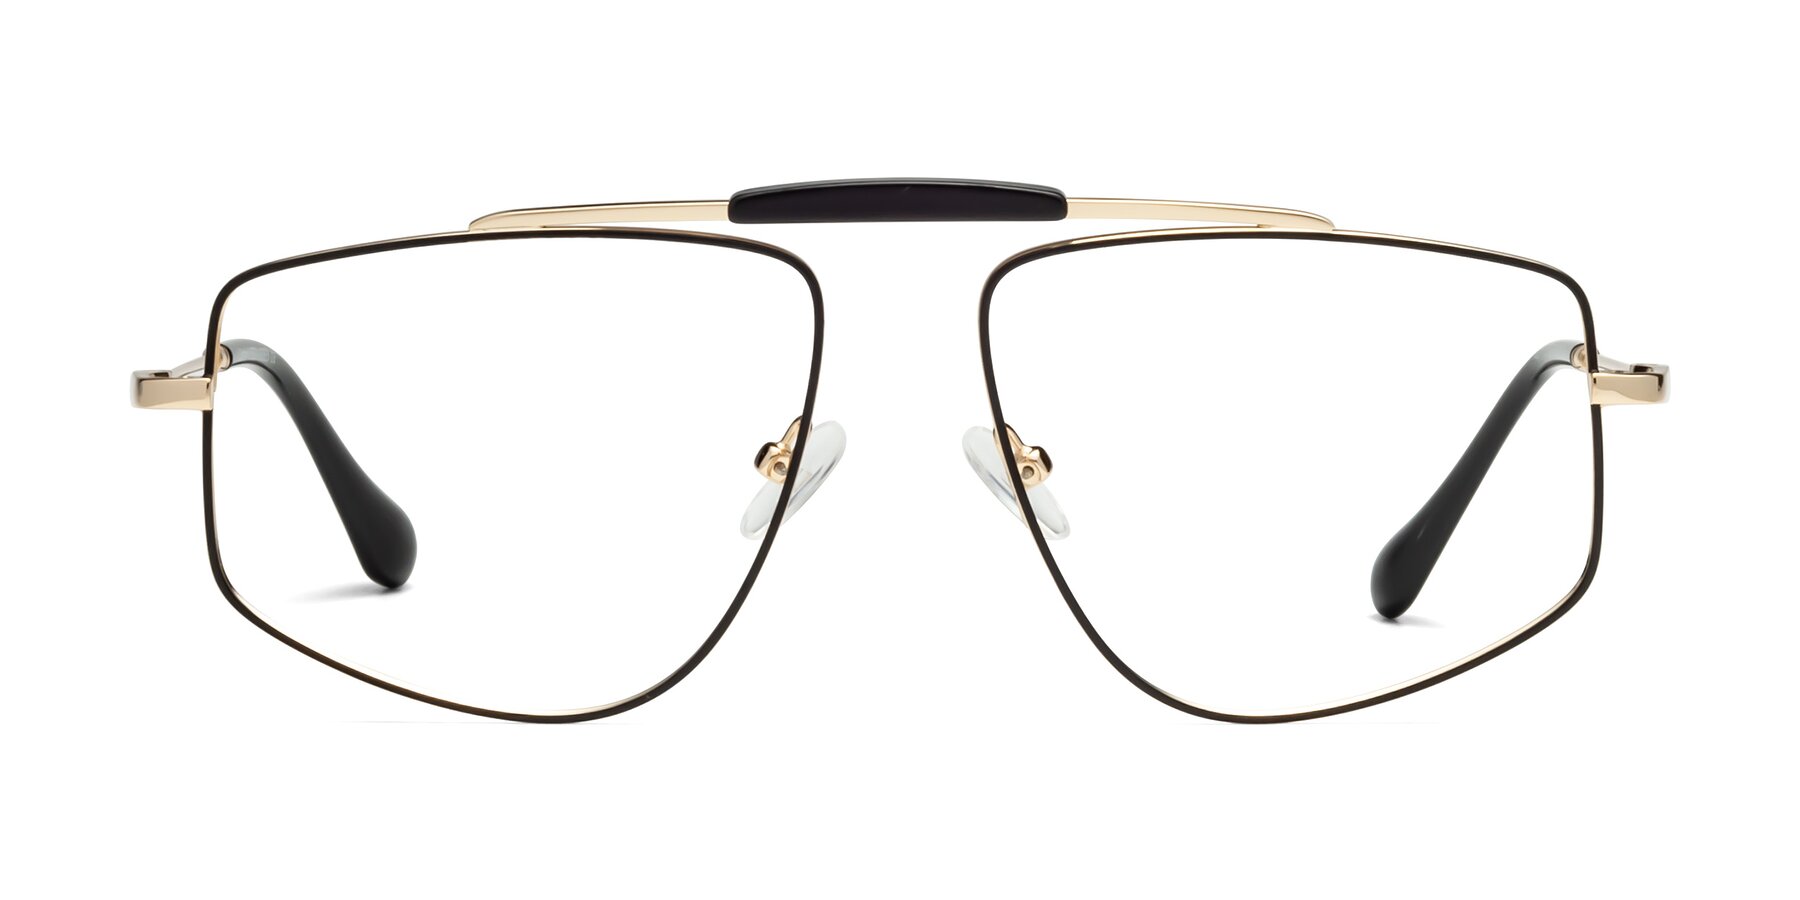 Santini - Black / Gold Sunglasses Frame